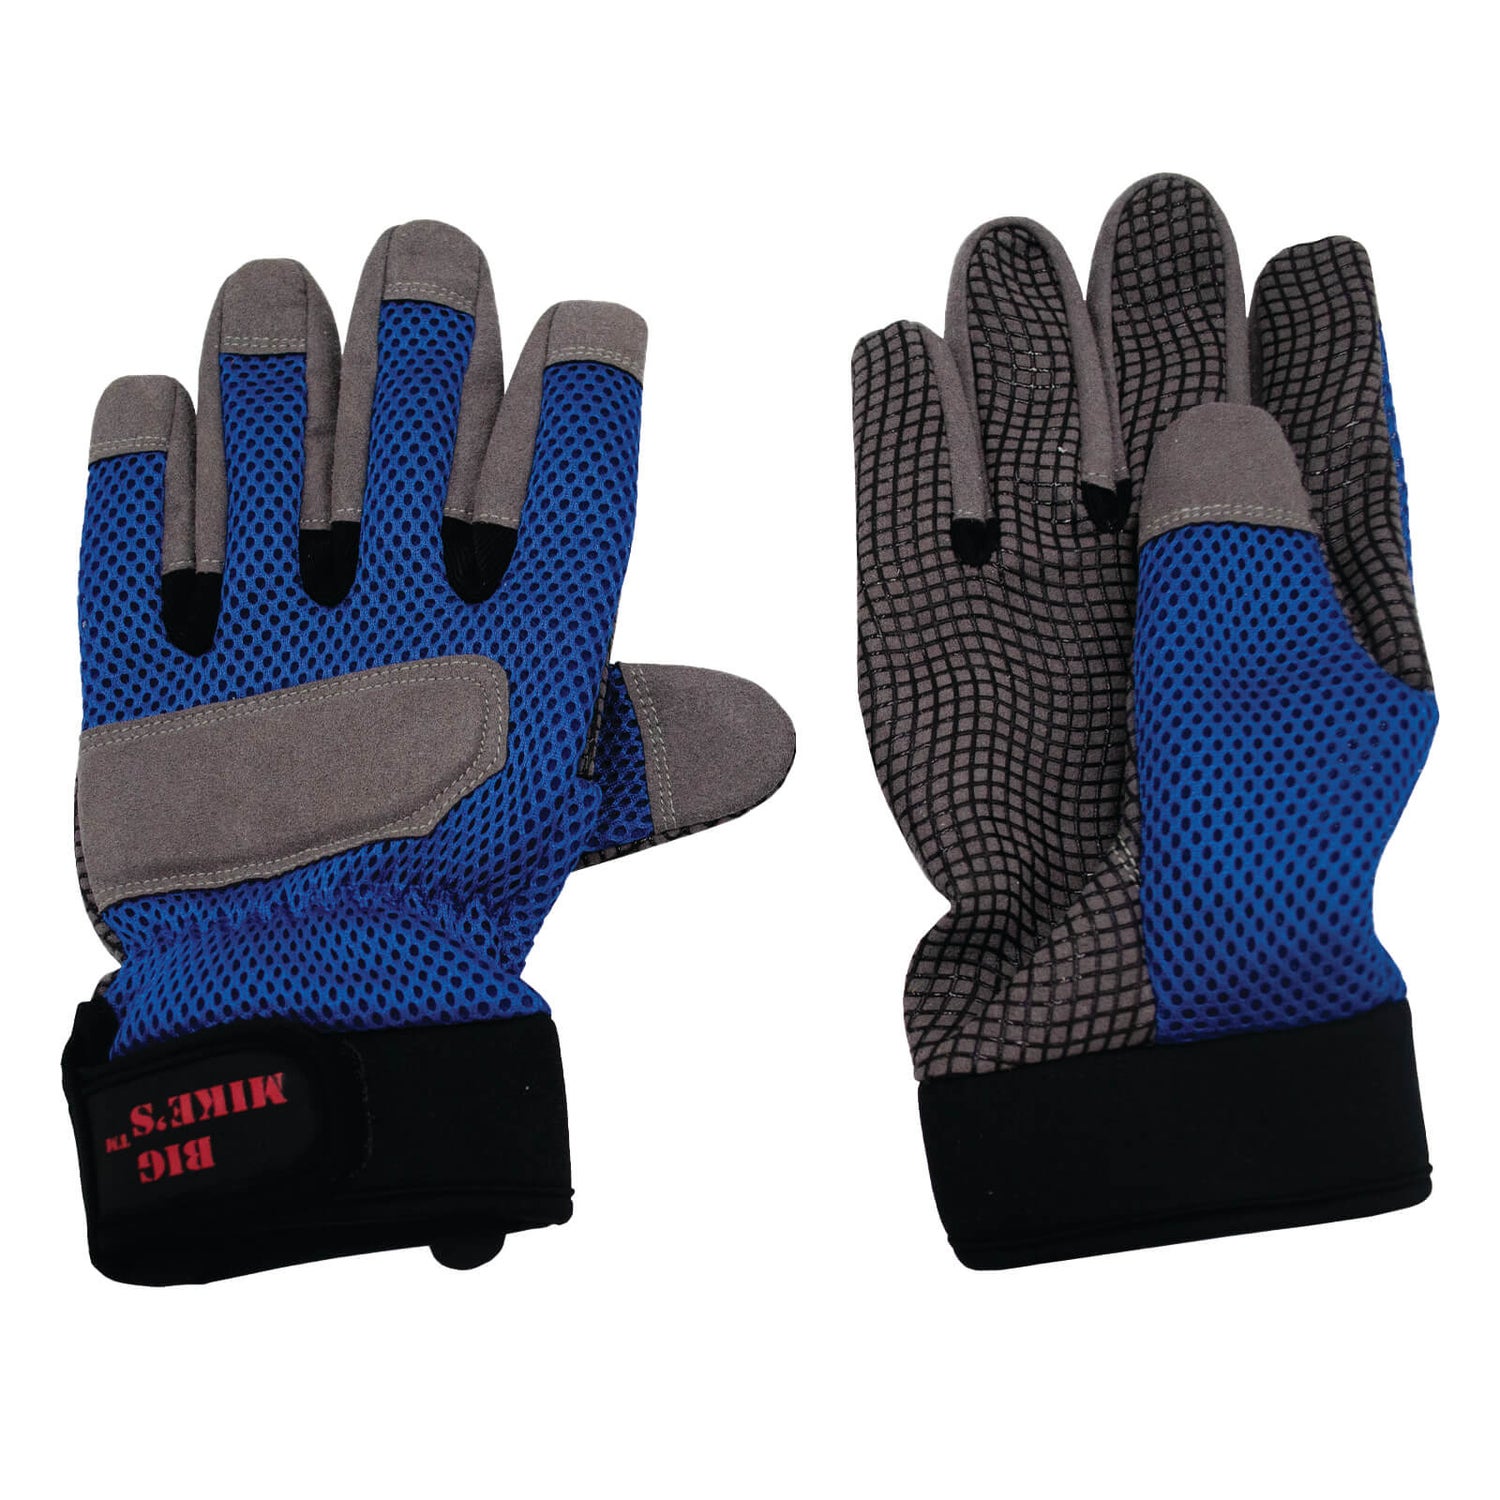 Dipped Hi Protect Work Glove XL